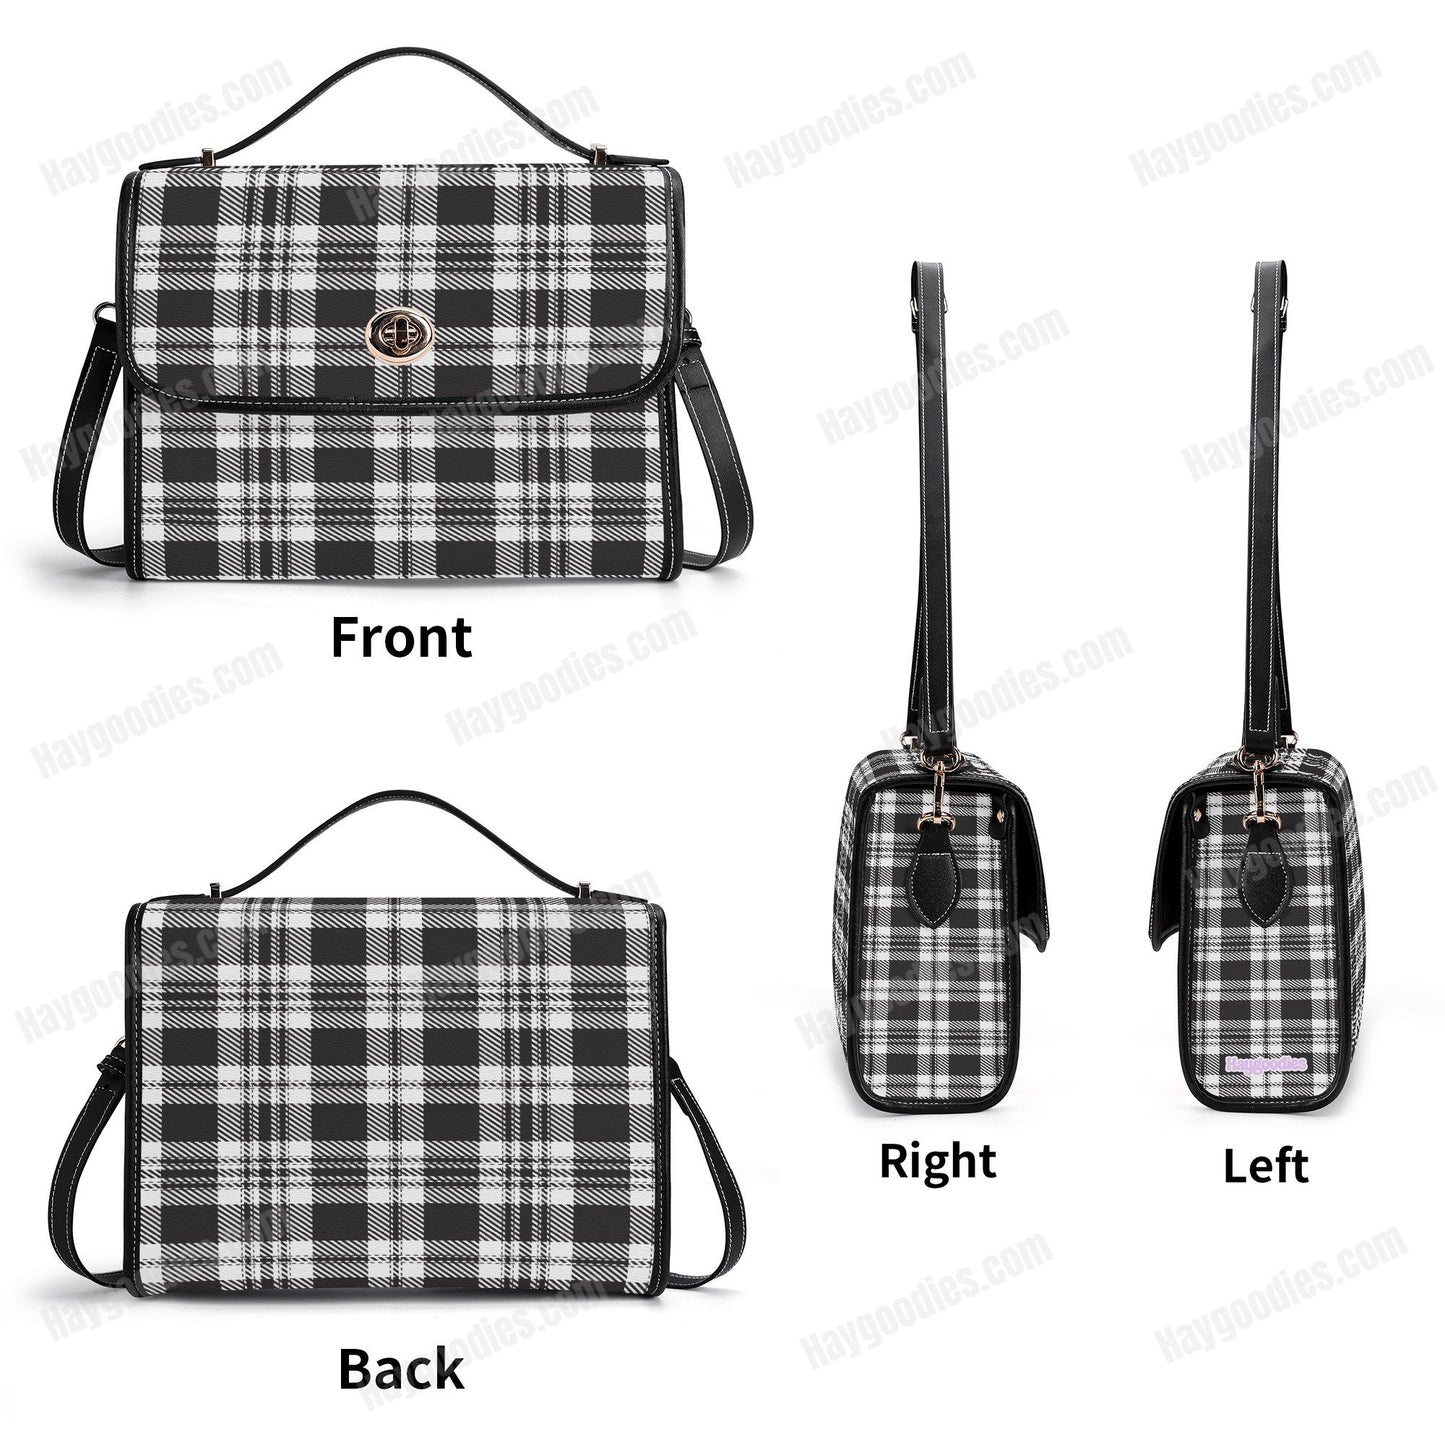 White and Black Plaid Pattern PU Leather Satchel Bag